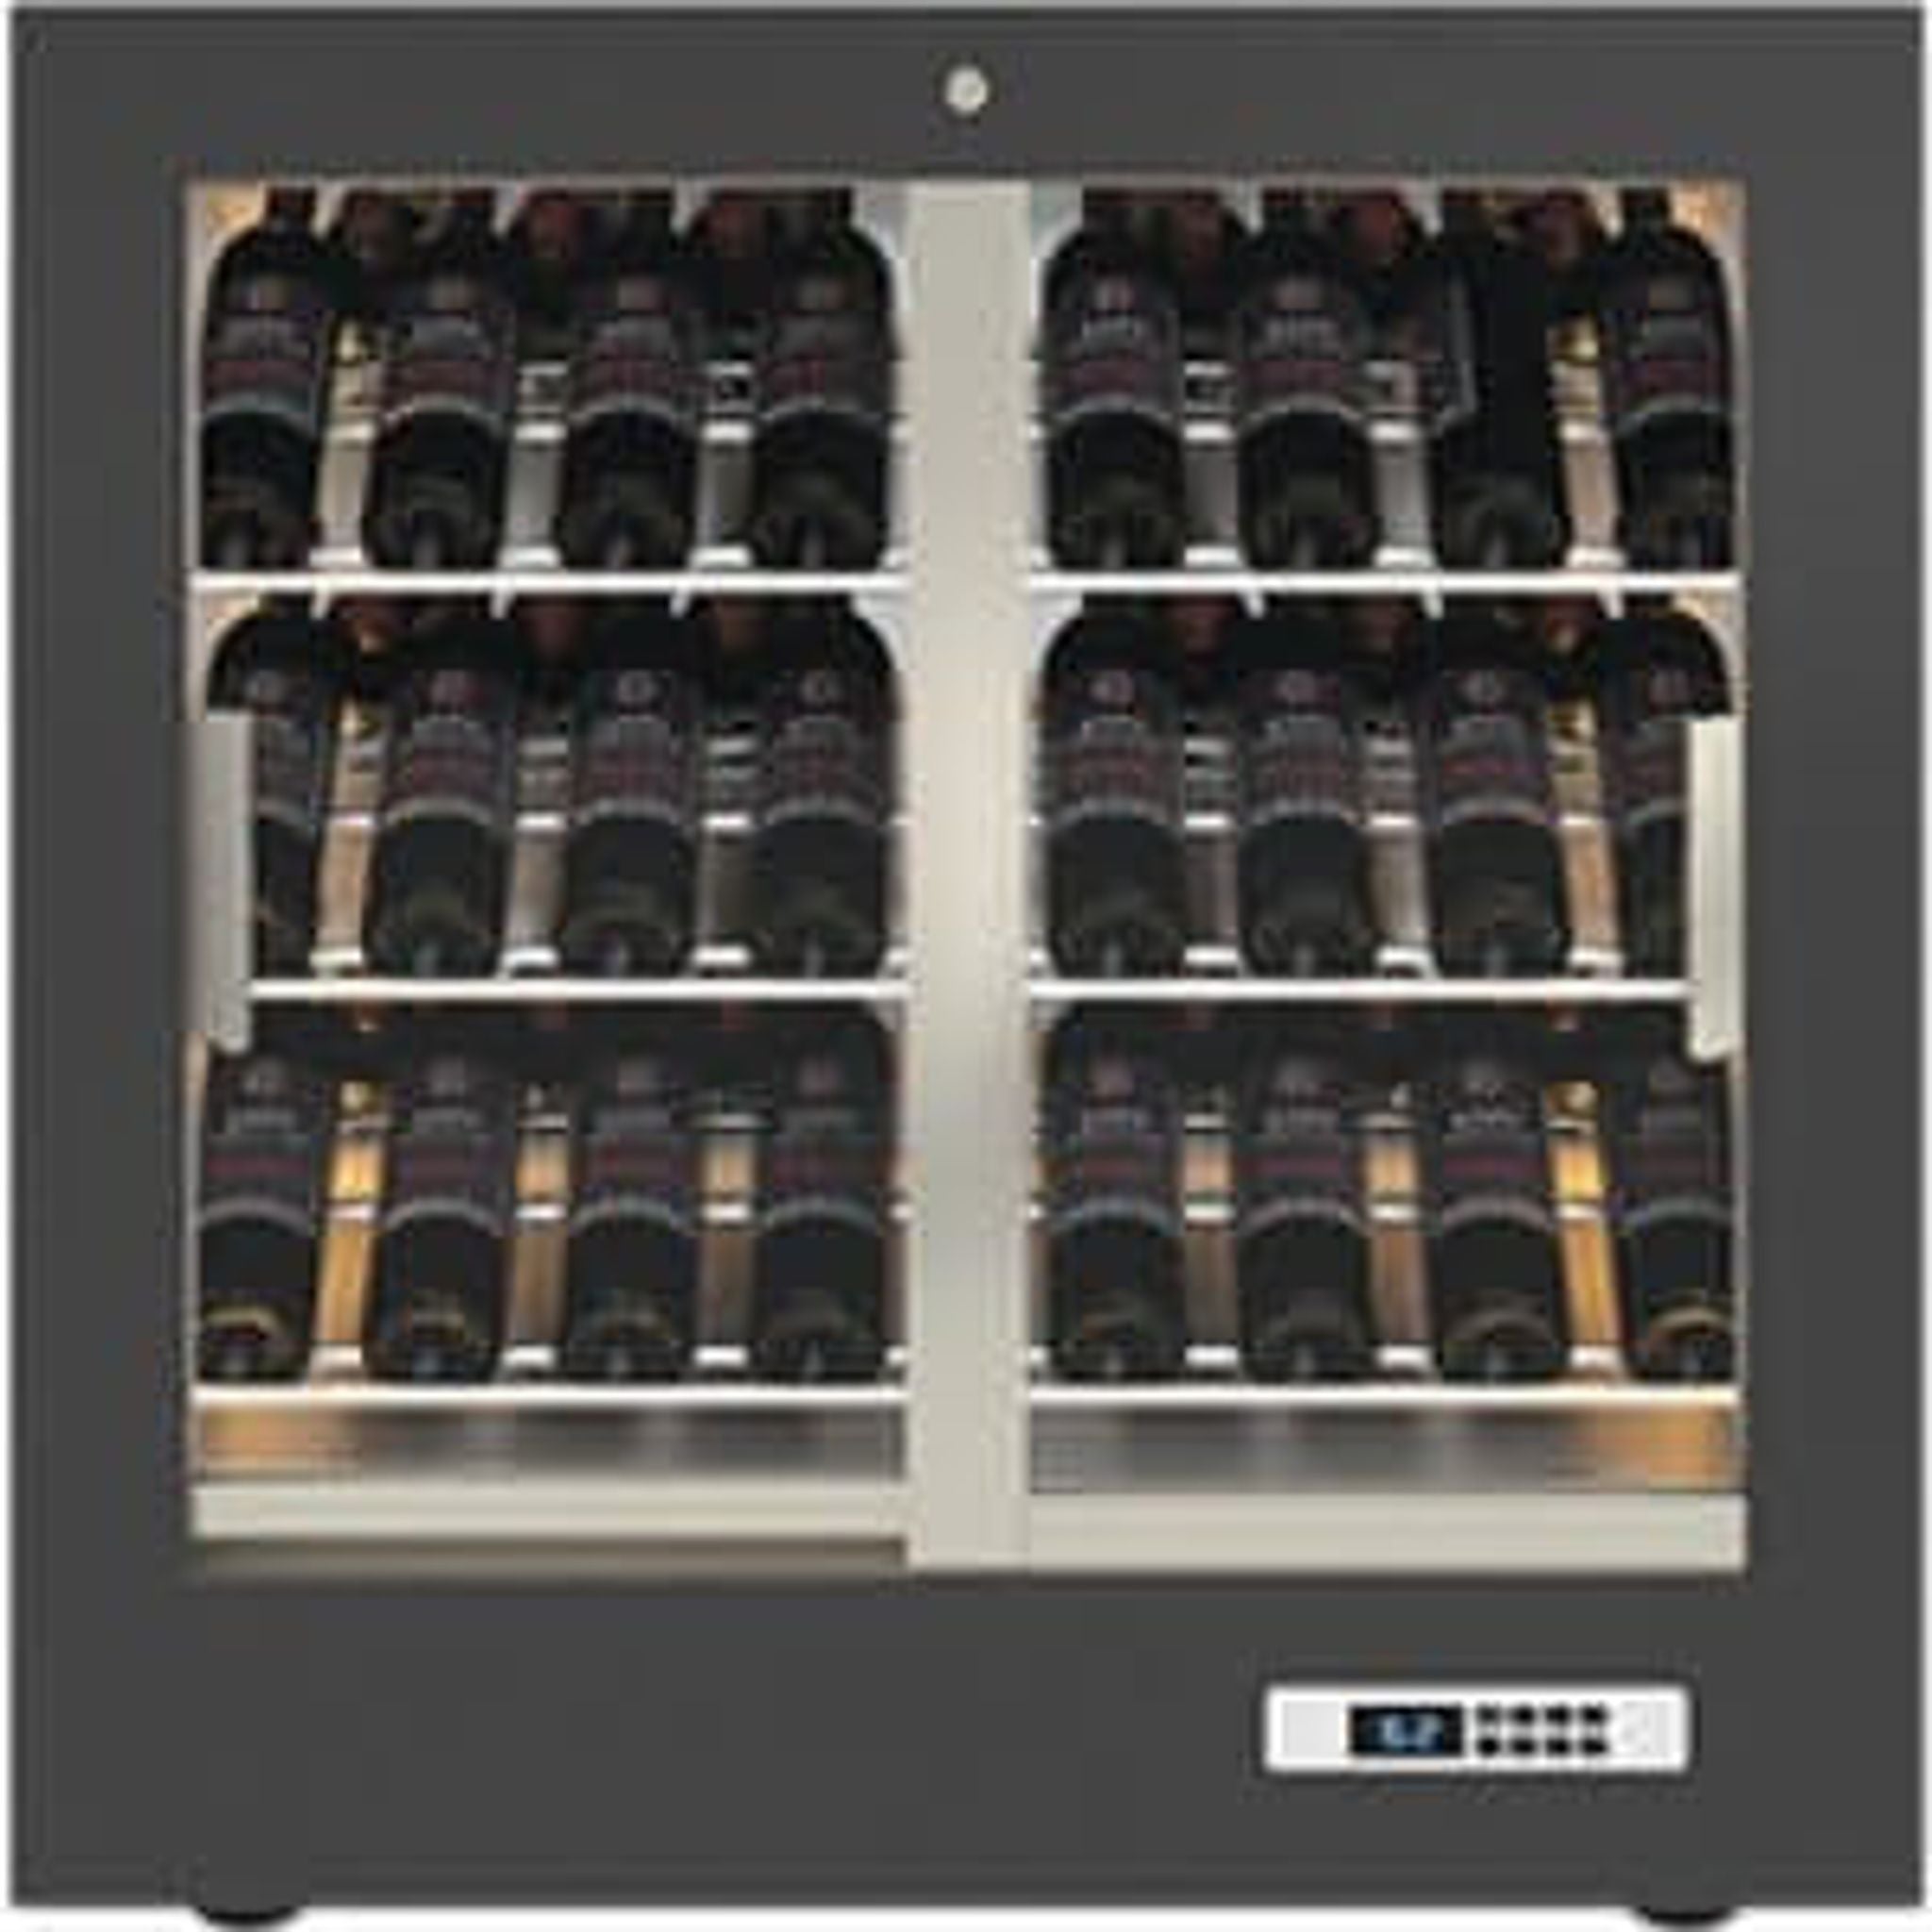 Teca Vino - Wine Wall TV22 - For Restaurant Use